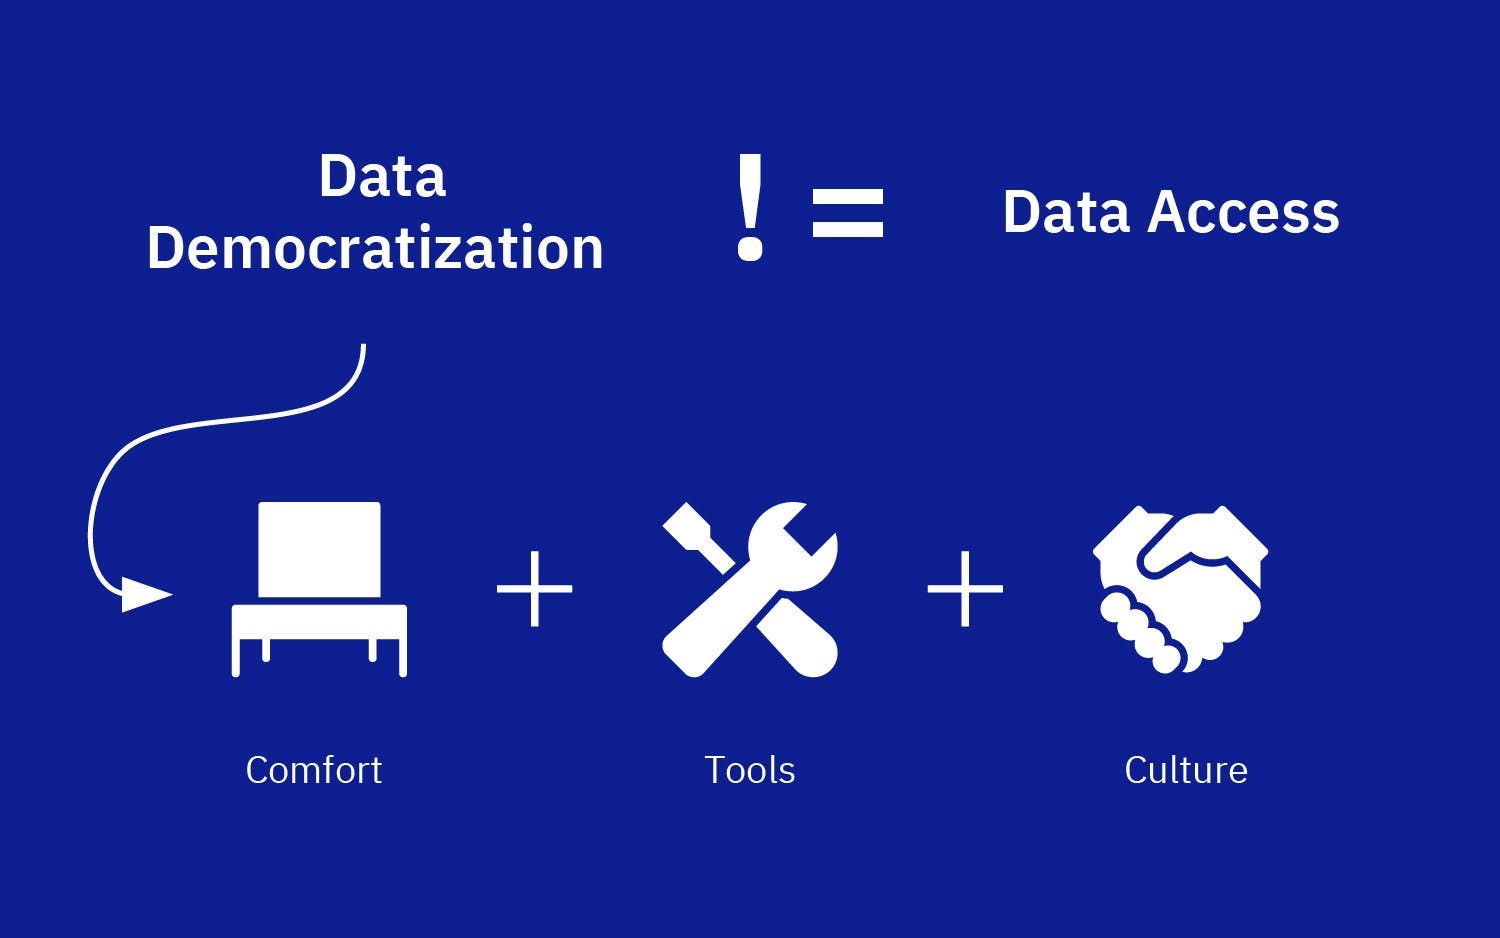 Data democratization definition